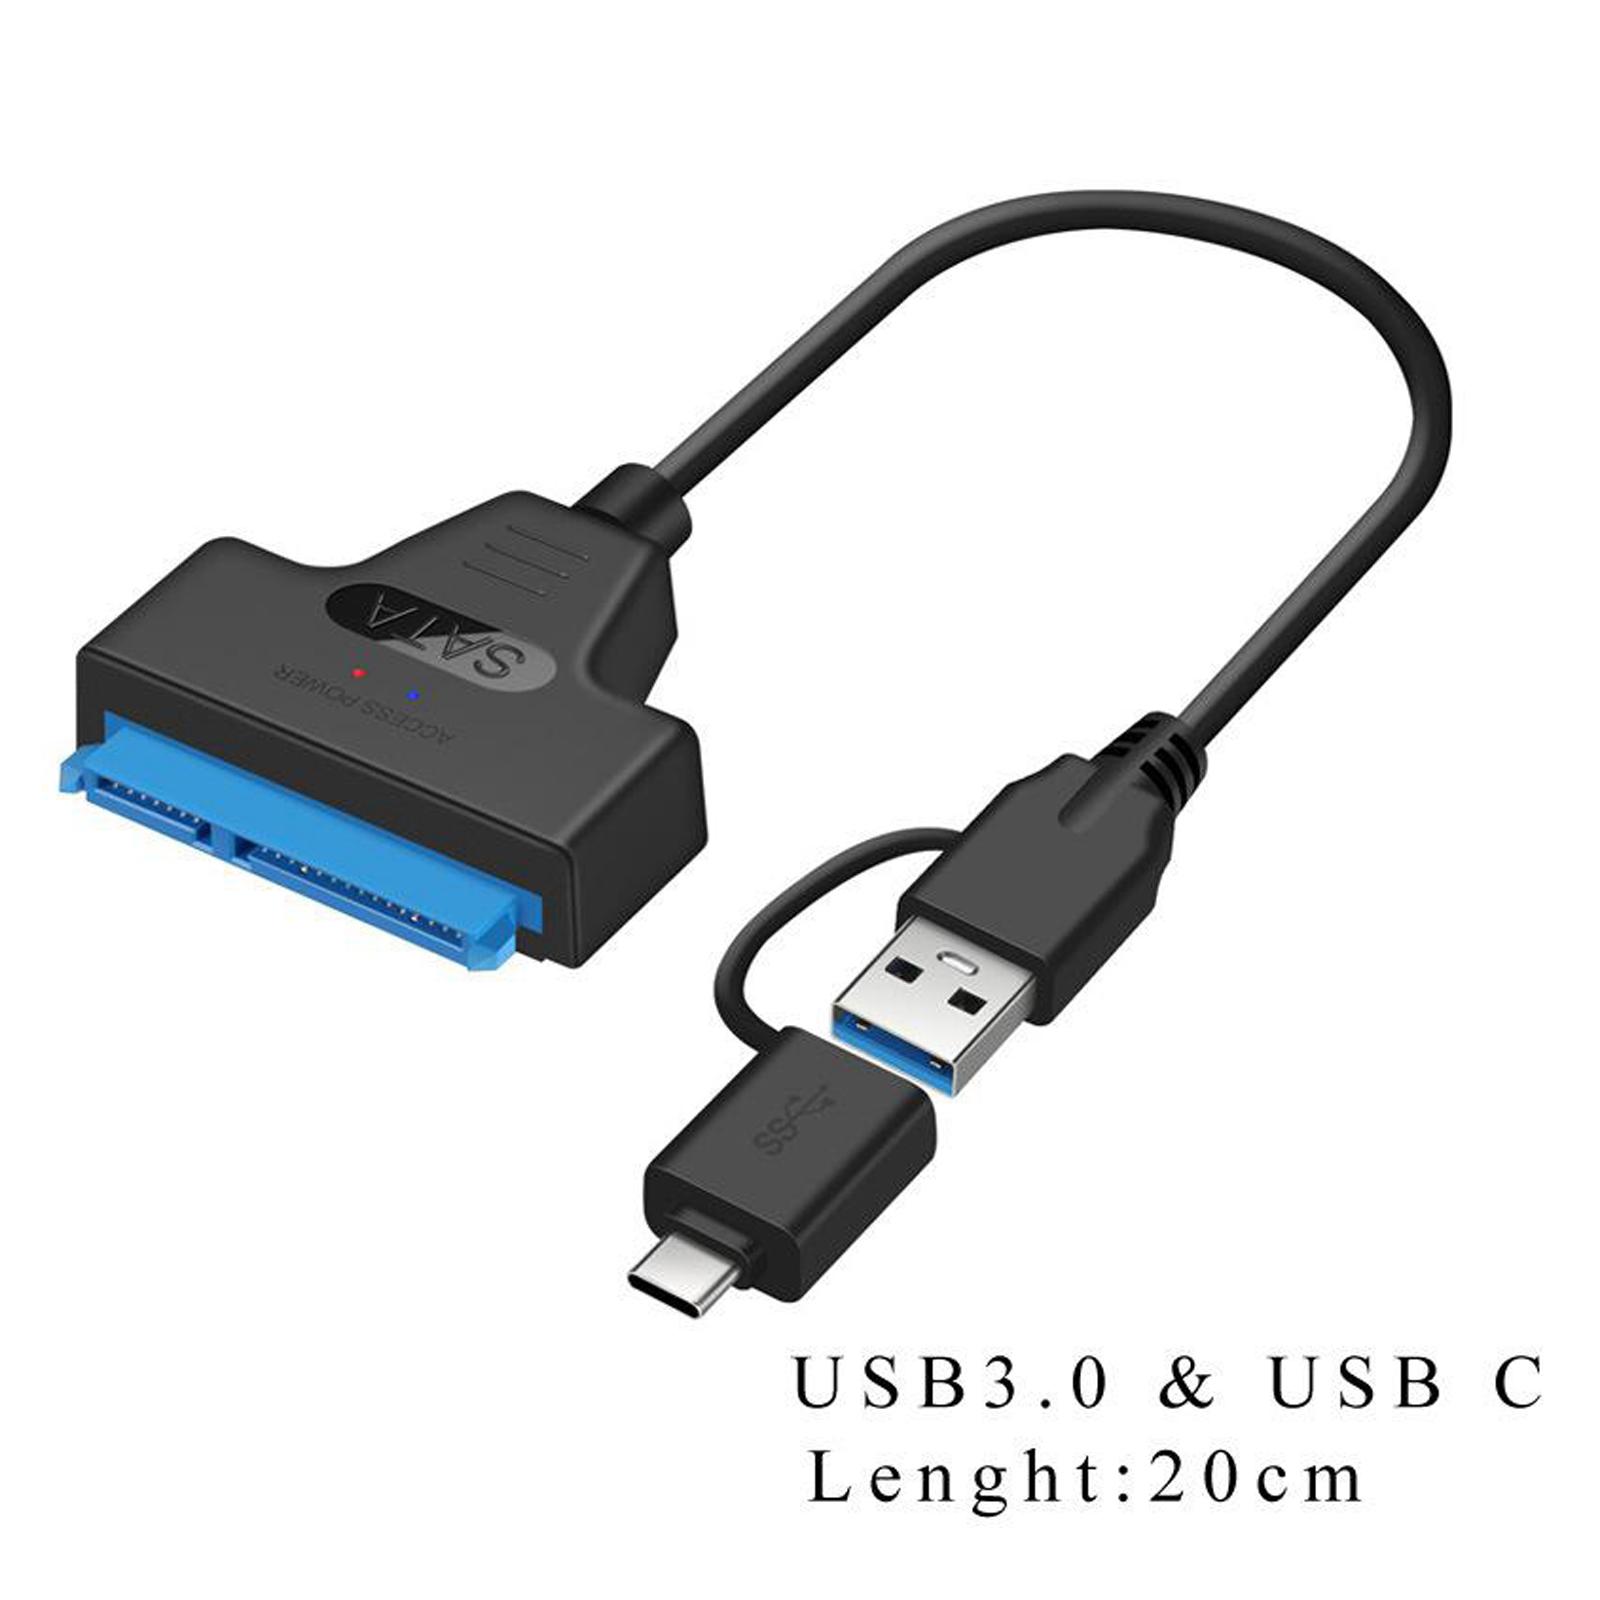 SATA to USB Adapter, USB 3.0 SATA III Hard Drive Adapter Cable, SATA to USB 3.0 Adapter Cable, for 2.5 inch SSD & HDD High Quality